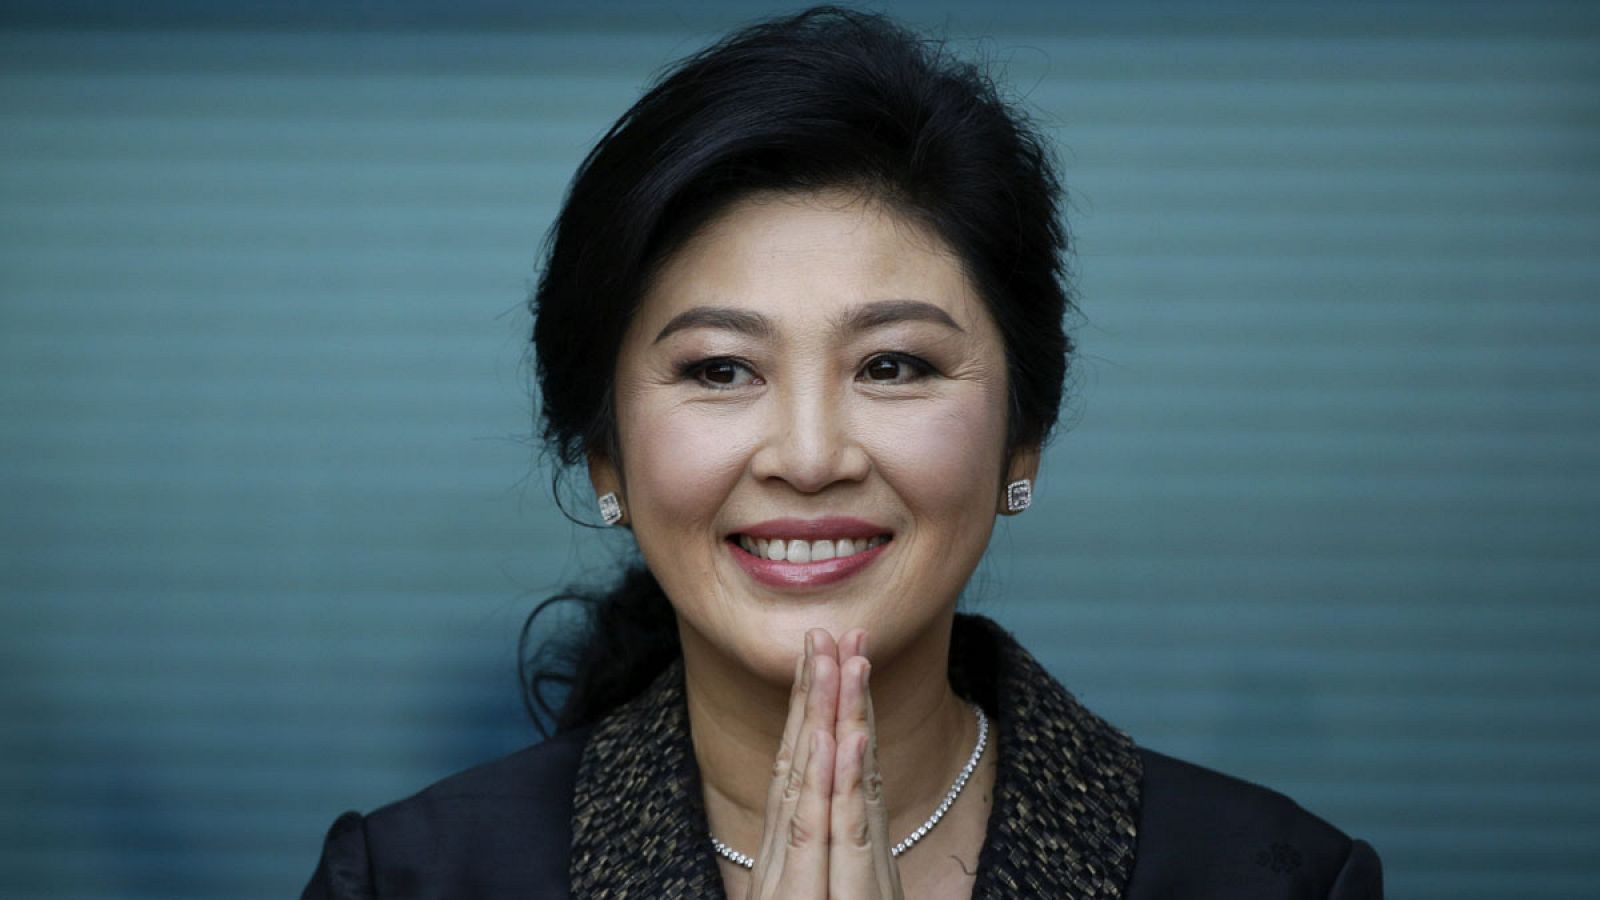 La ex primer ministra tailandesa ha huido a Dubái, según sus familiares